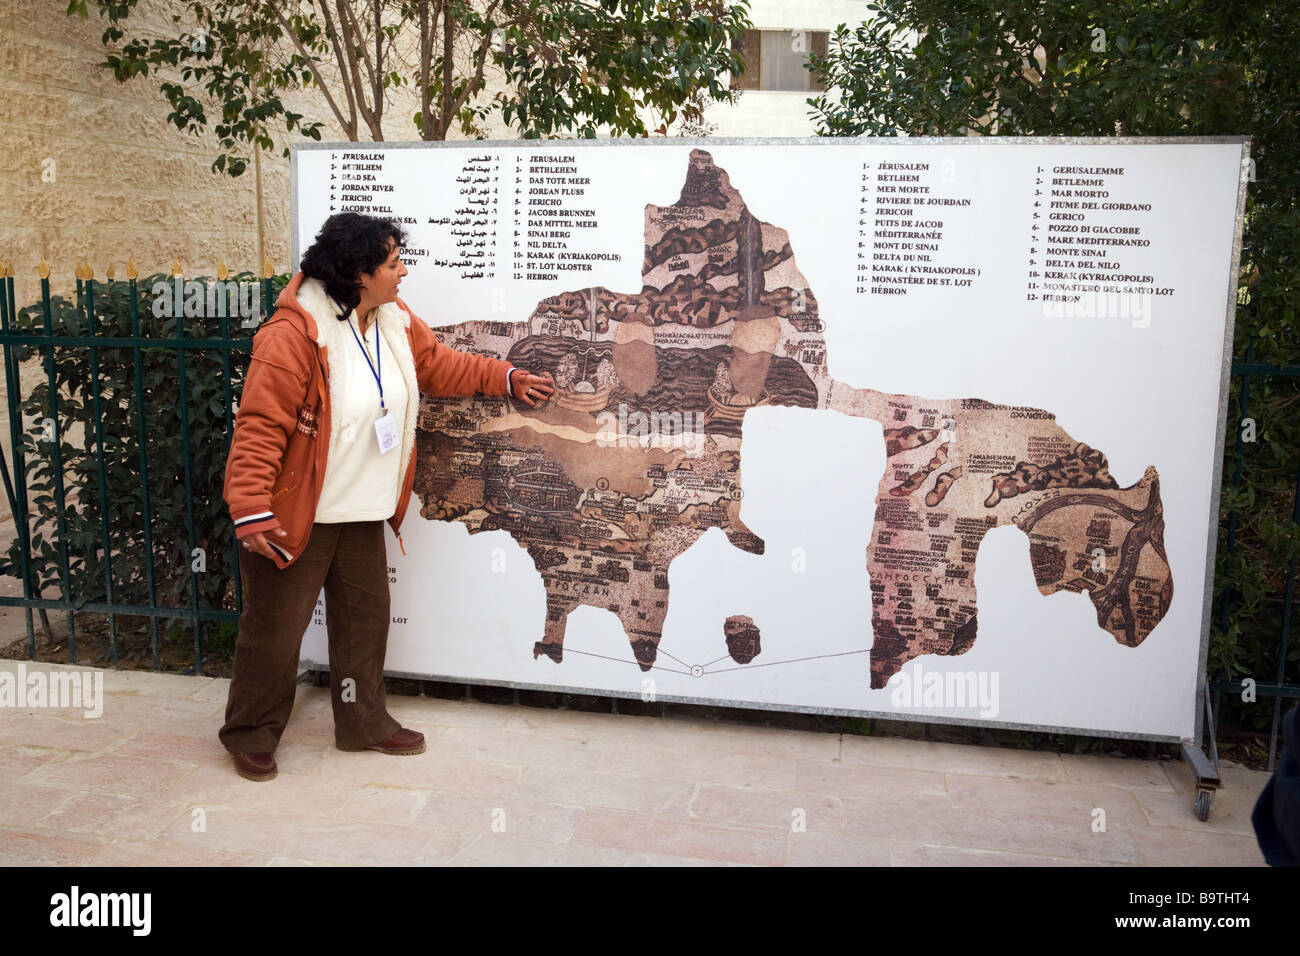 A local guide describing the mosaic map of the Holy Land, Madaba, Jordan Stock Photo